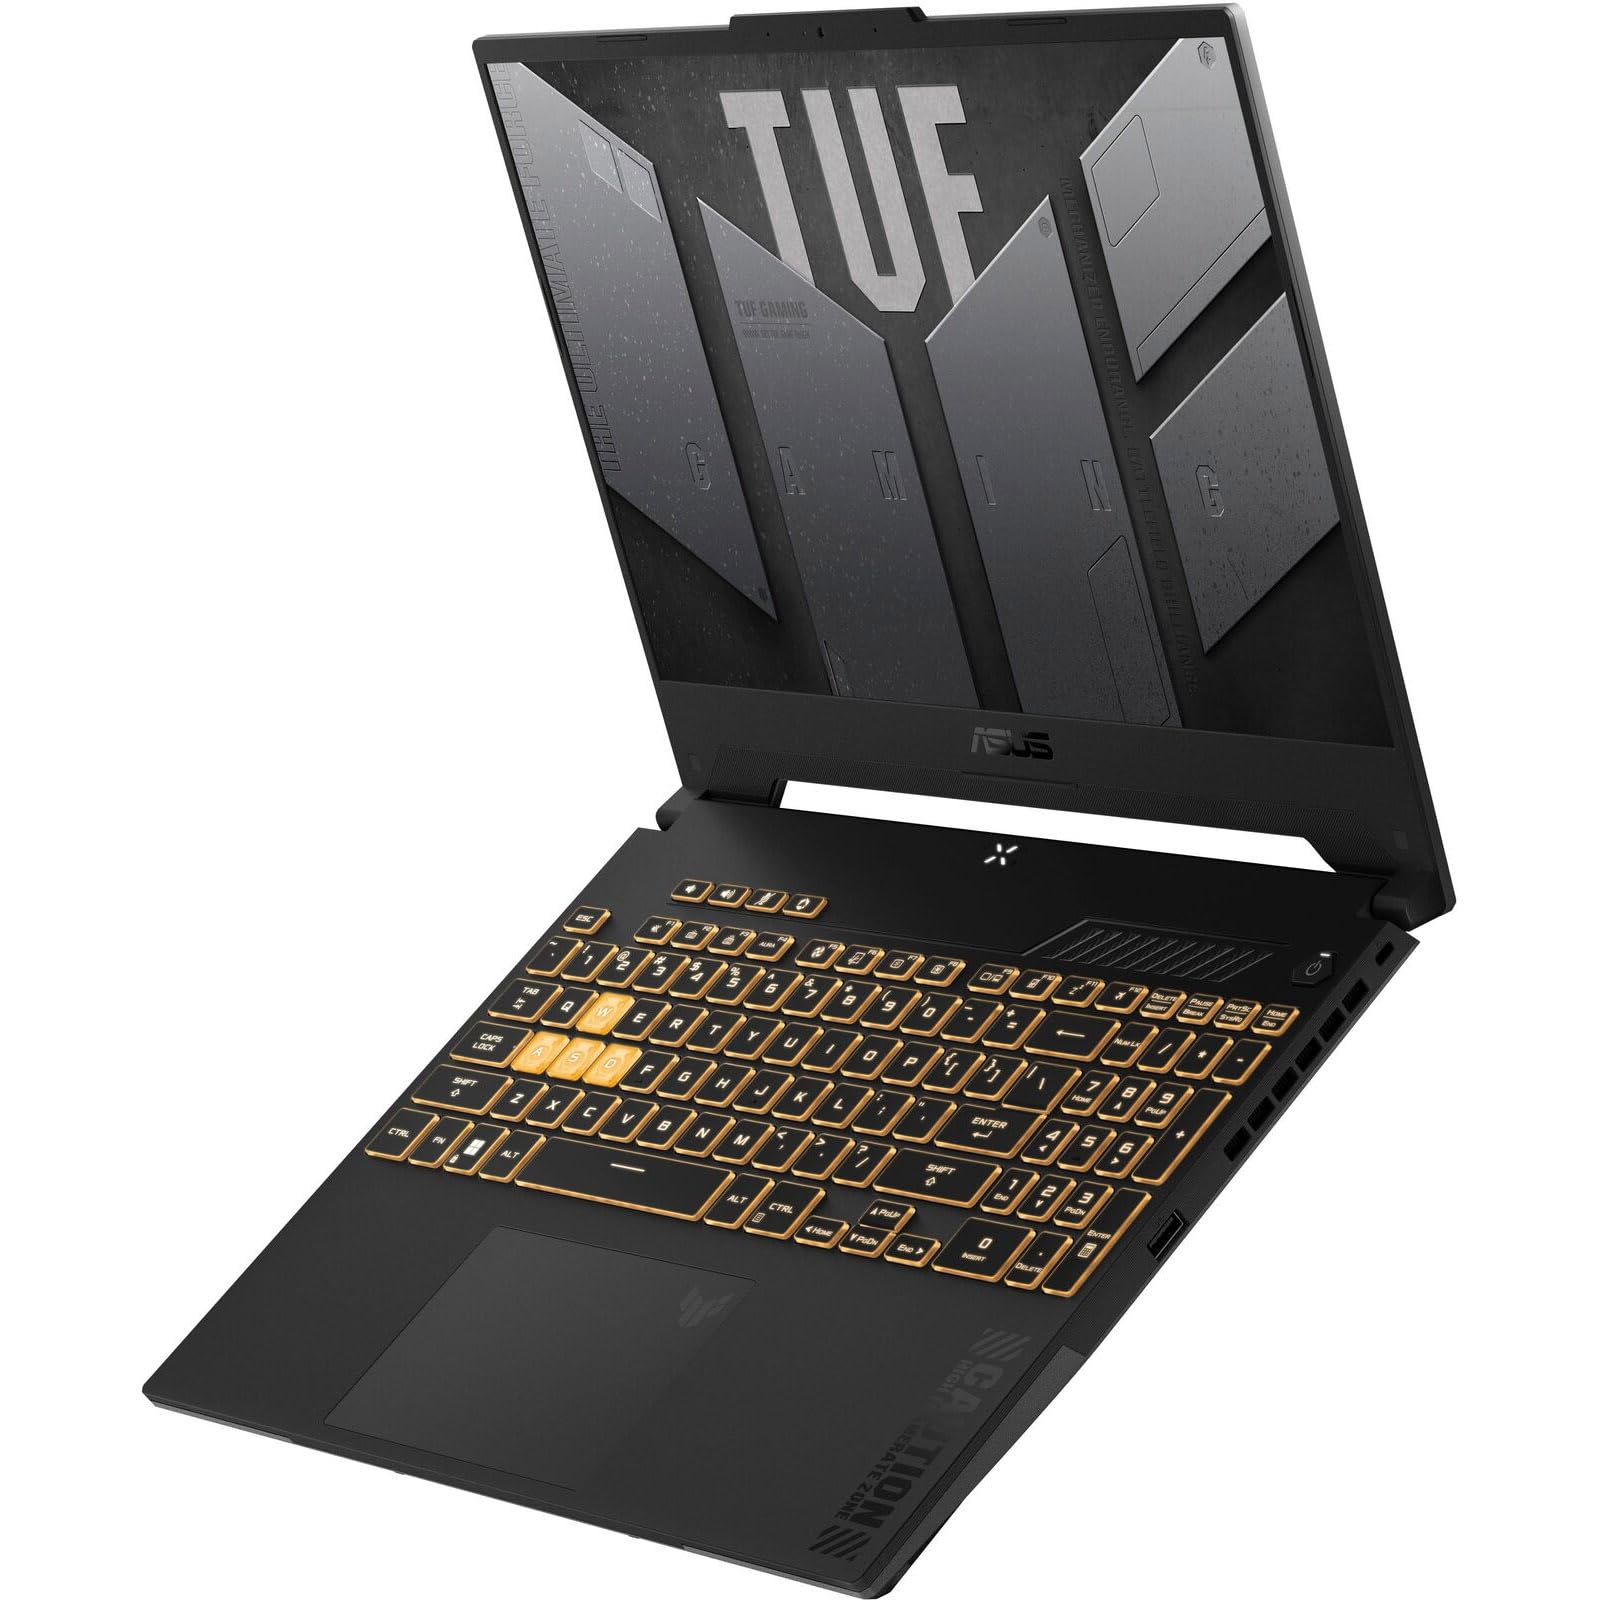 ASUS TUF Gaming Laptop 4070 - i7-12700H 14Core - 15.6 FHD IPS Display 100% sRGB - RGB Backlit Keyboard - MUX 140W - G-SYNC - Wi-Fi6 - Thunderbolt4 USB C - HDMI Cable - 2023 (32GB RAM |2TB PCIe SSD)